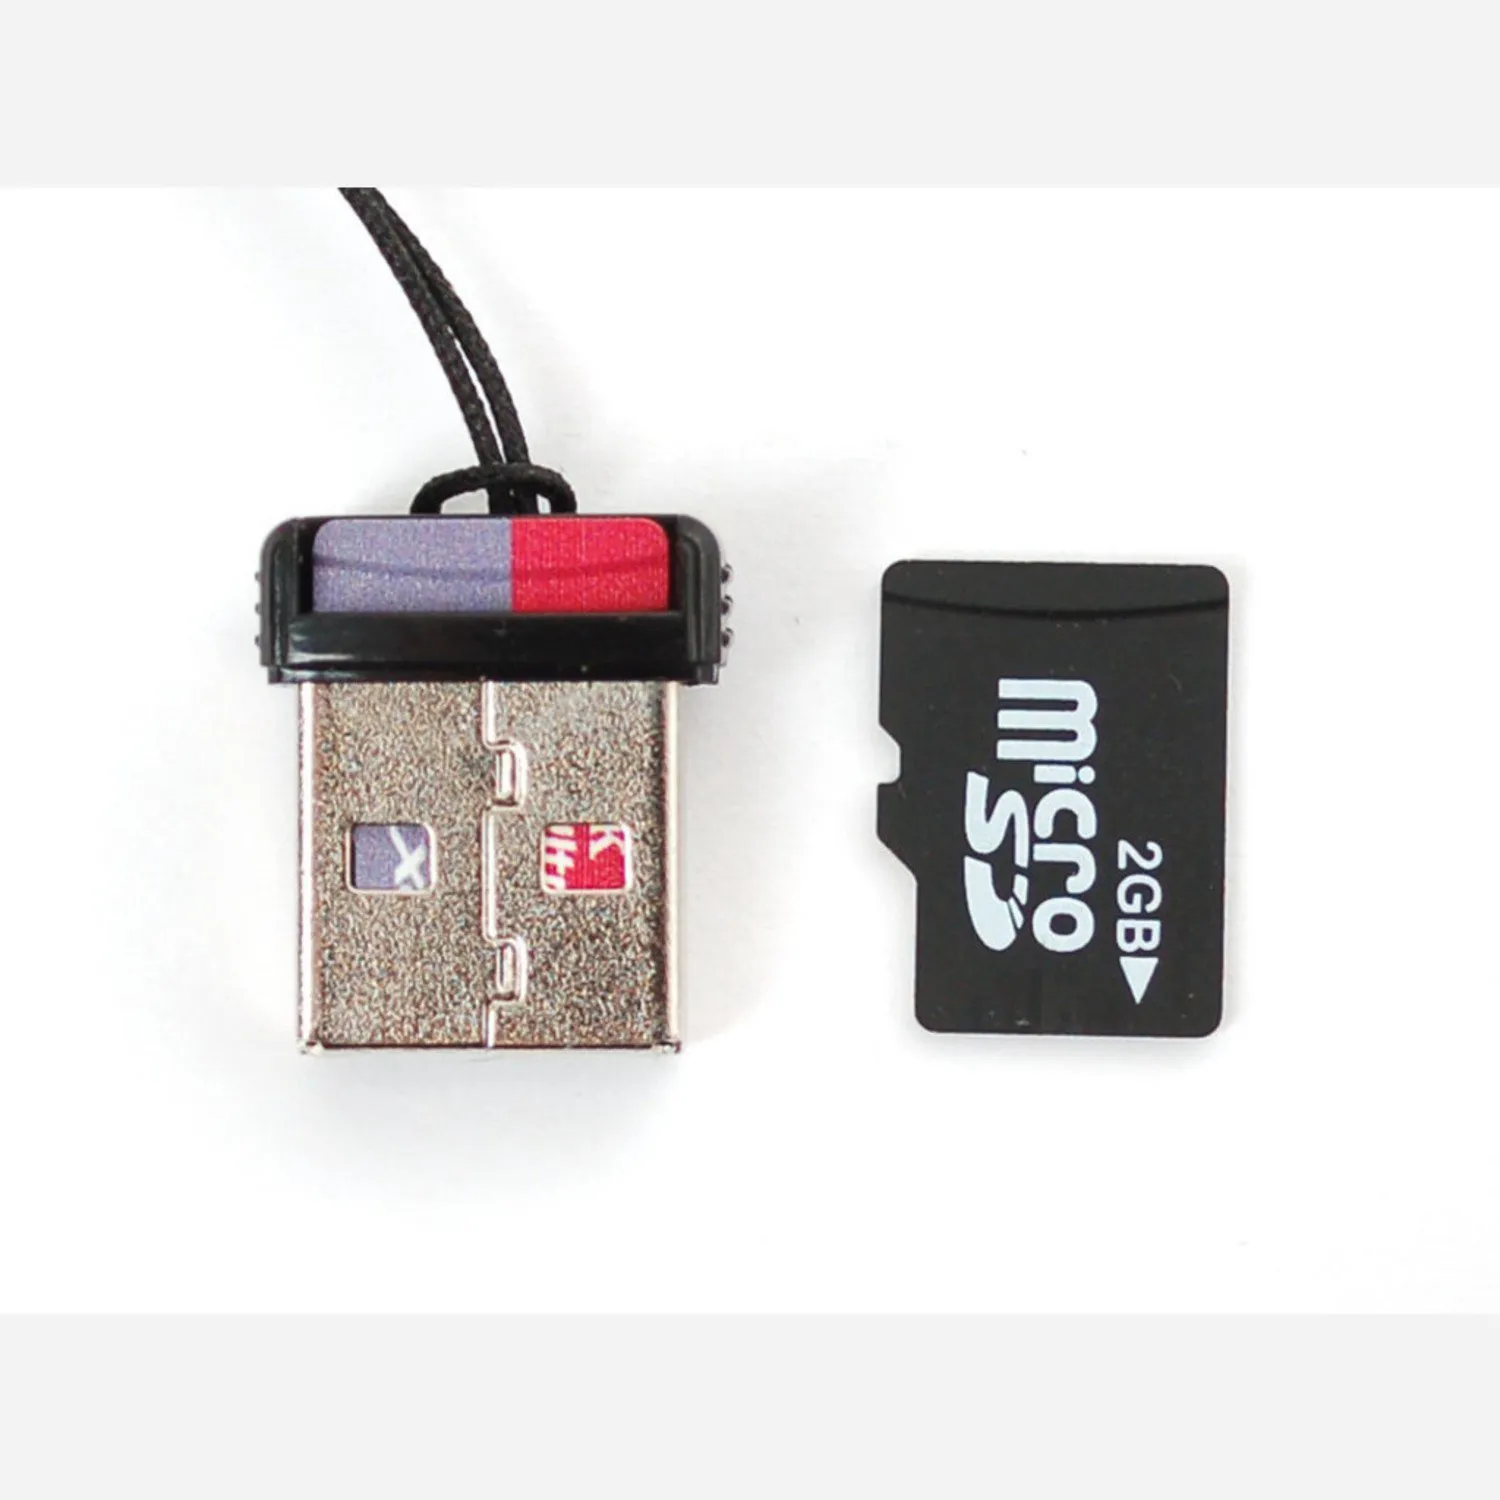 Photo of USB MicroSD Card Reader/Writer - microSD / microSDHC / microSDXC